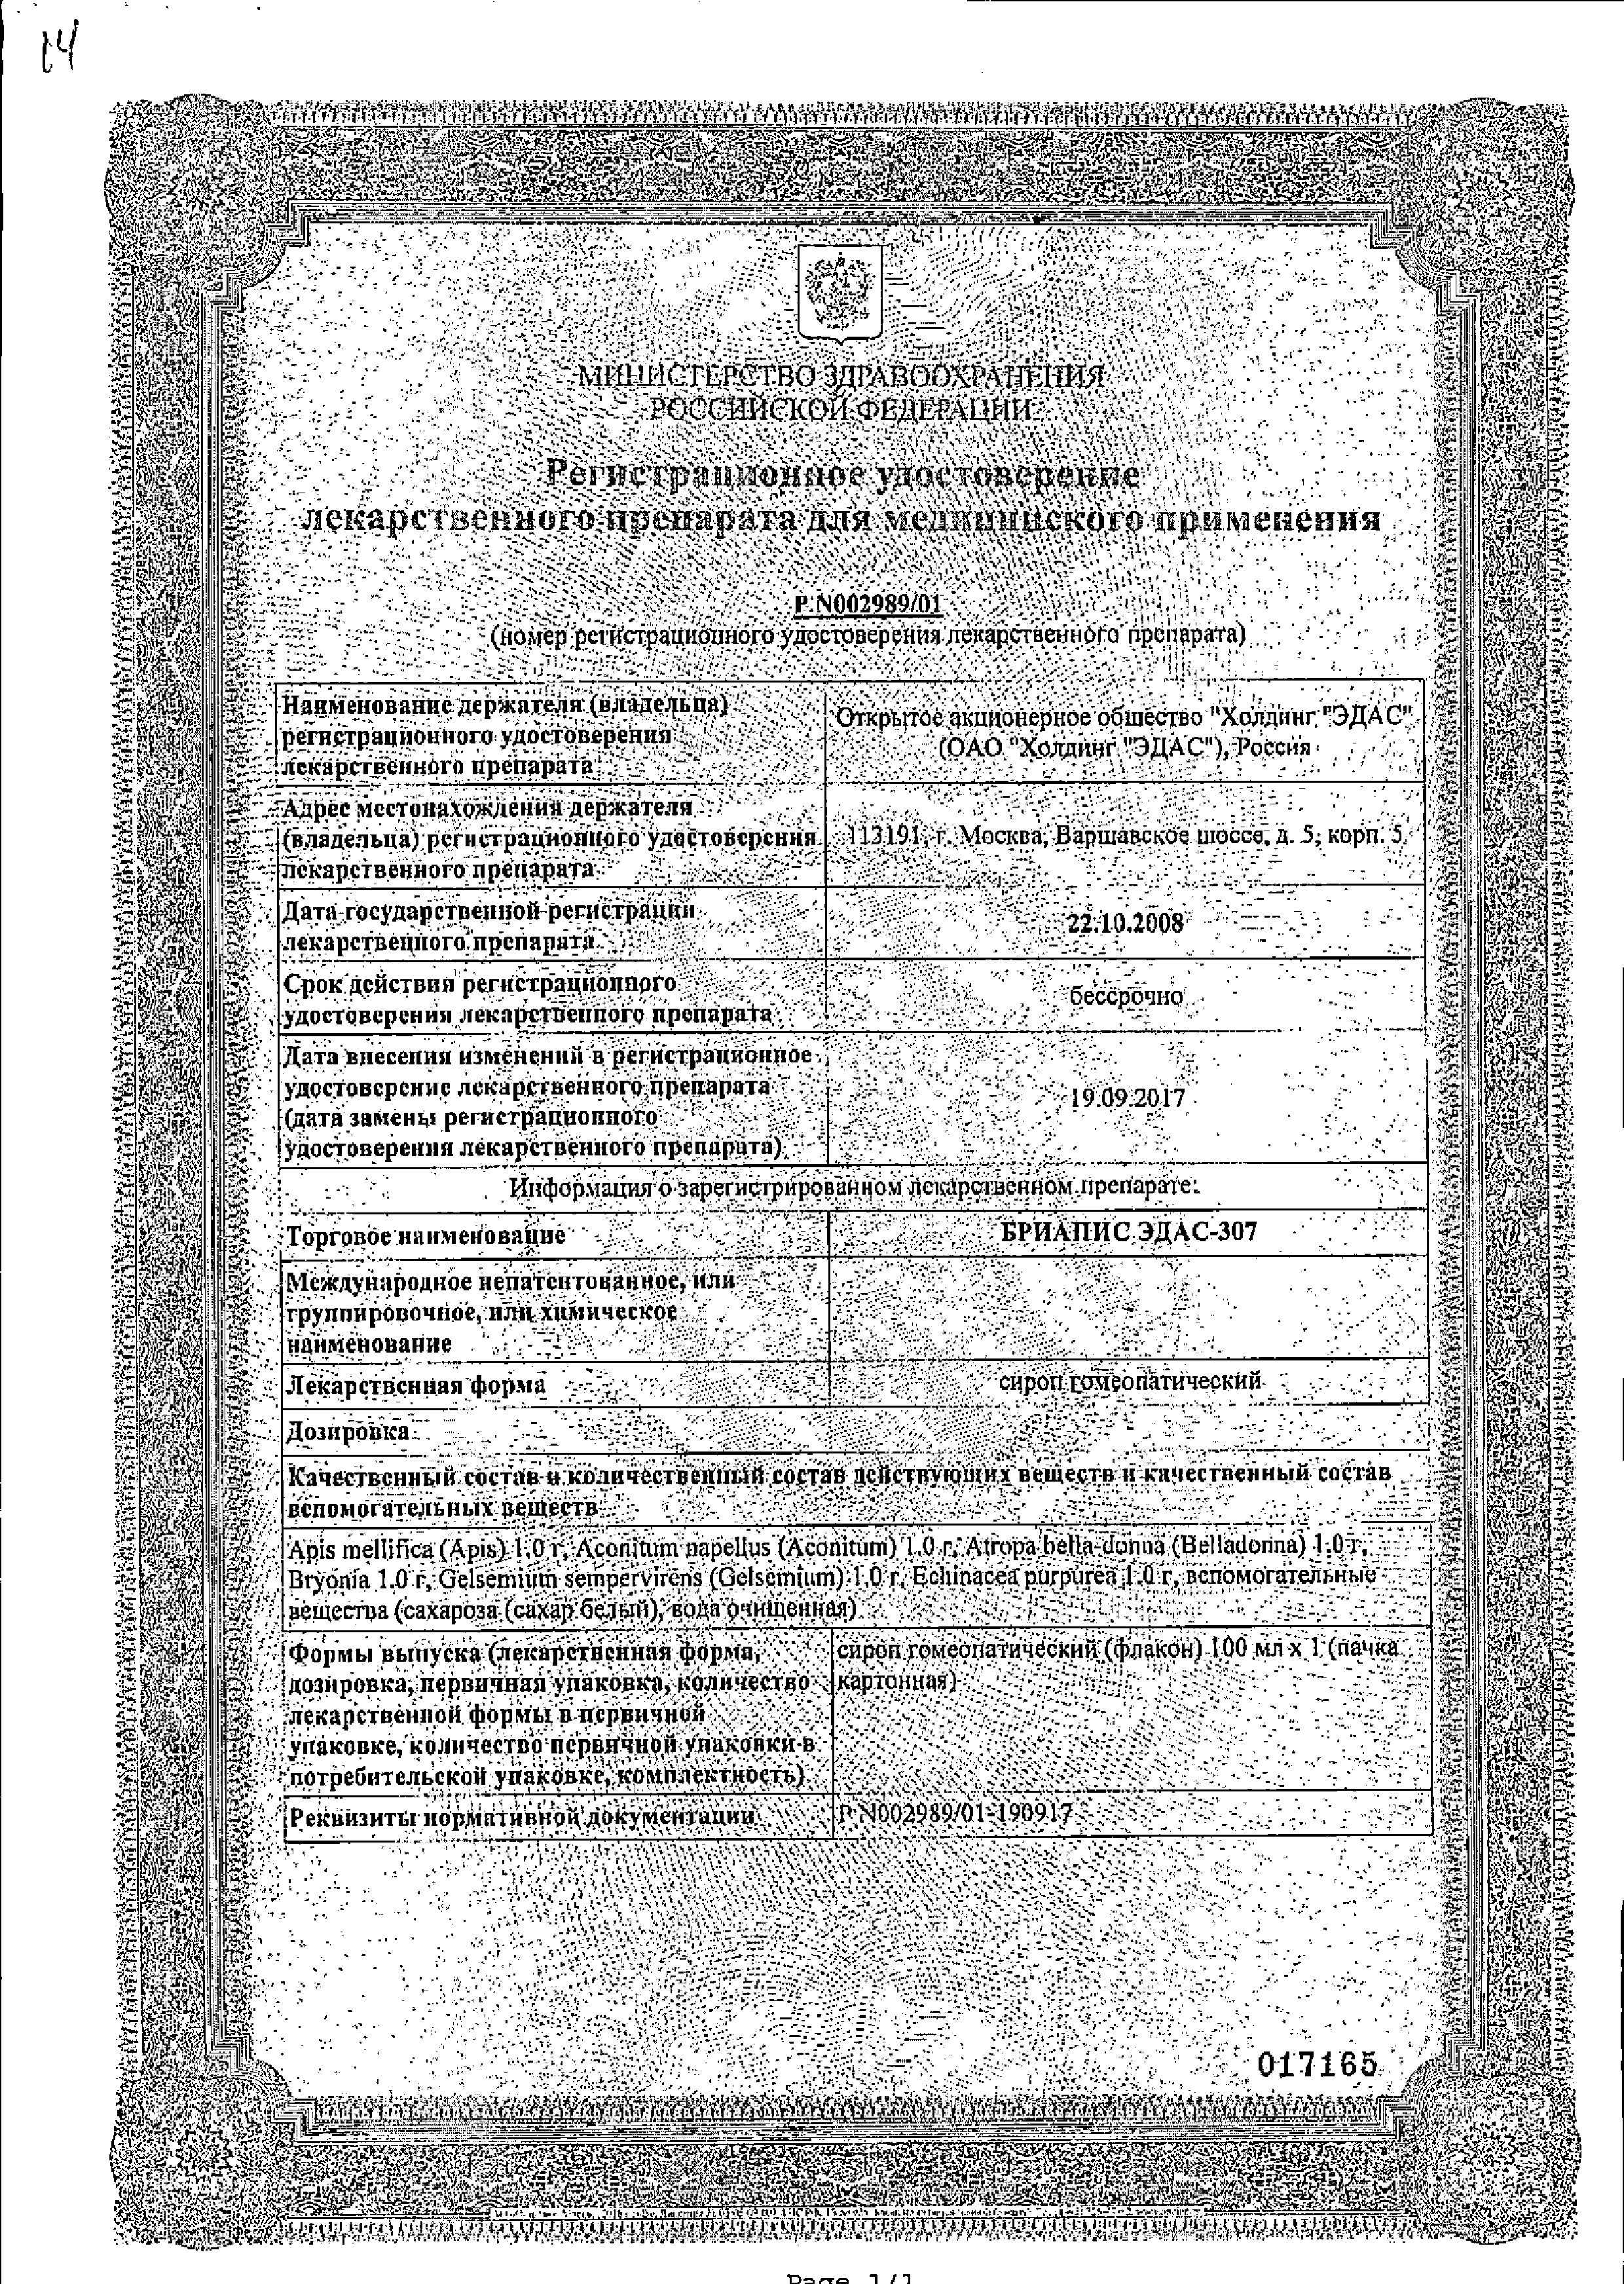 Эдас-307 Бриапис сертификат